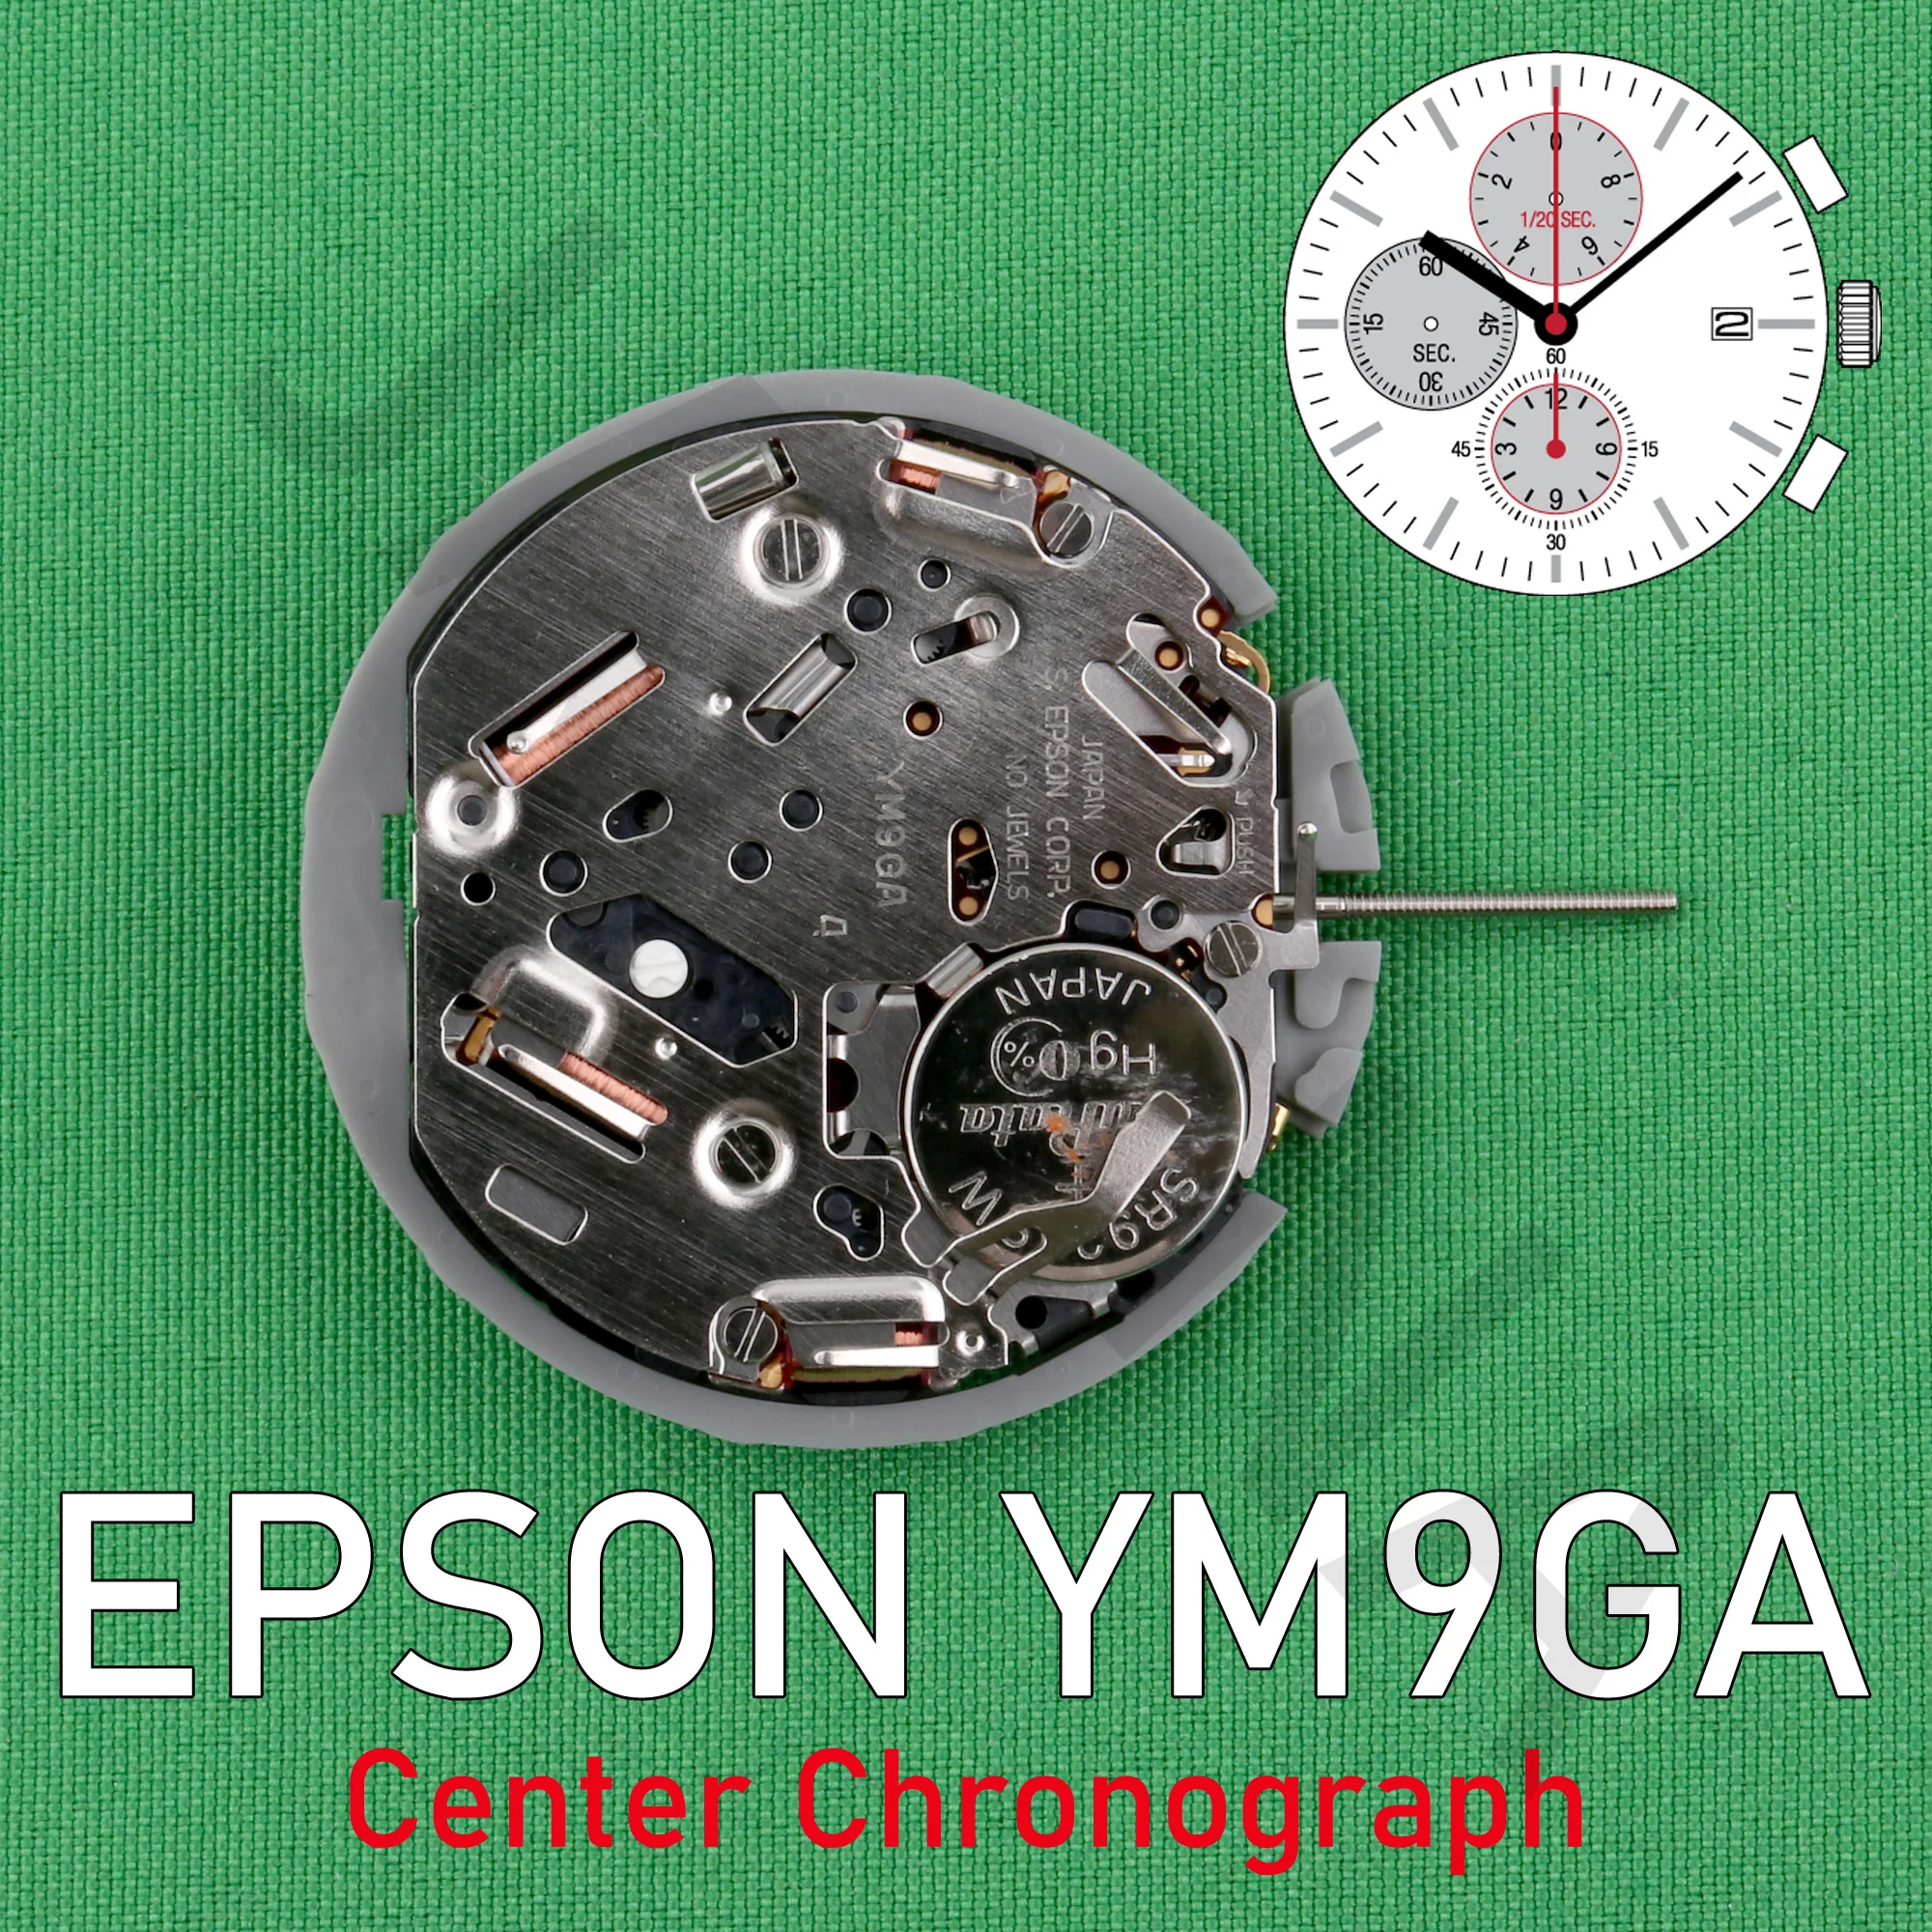 Механизъм YM9G Япония Механизъм EPSON YM9GA малки стрелки на 6.9.12 Аналогов кварцов 12-инчов централен секунди хронограф Изображение 2